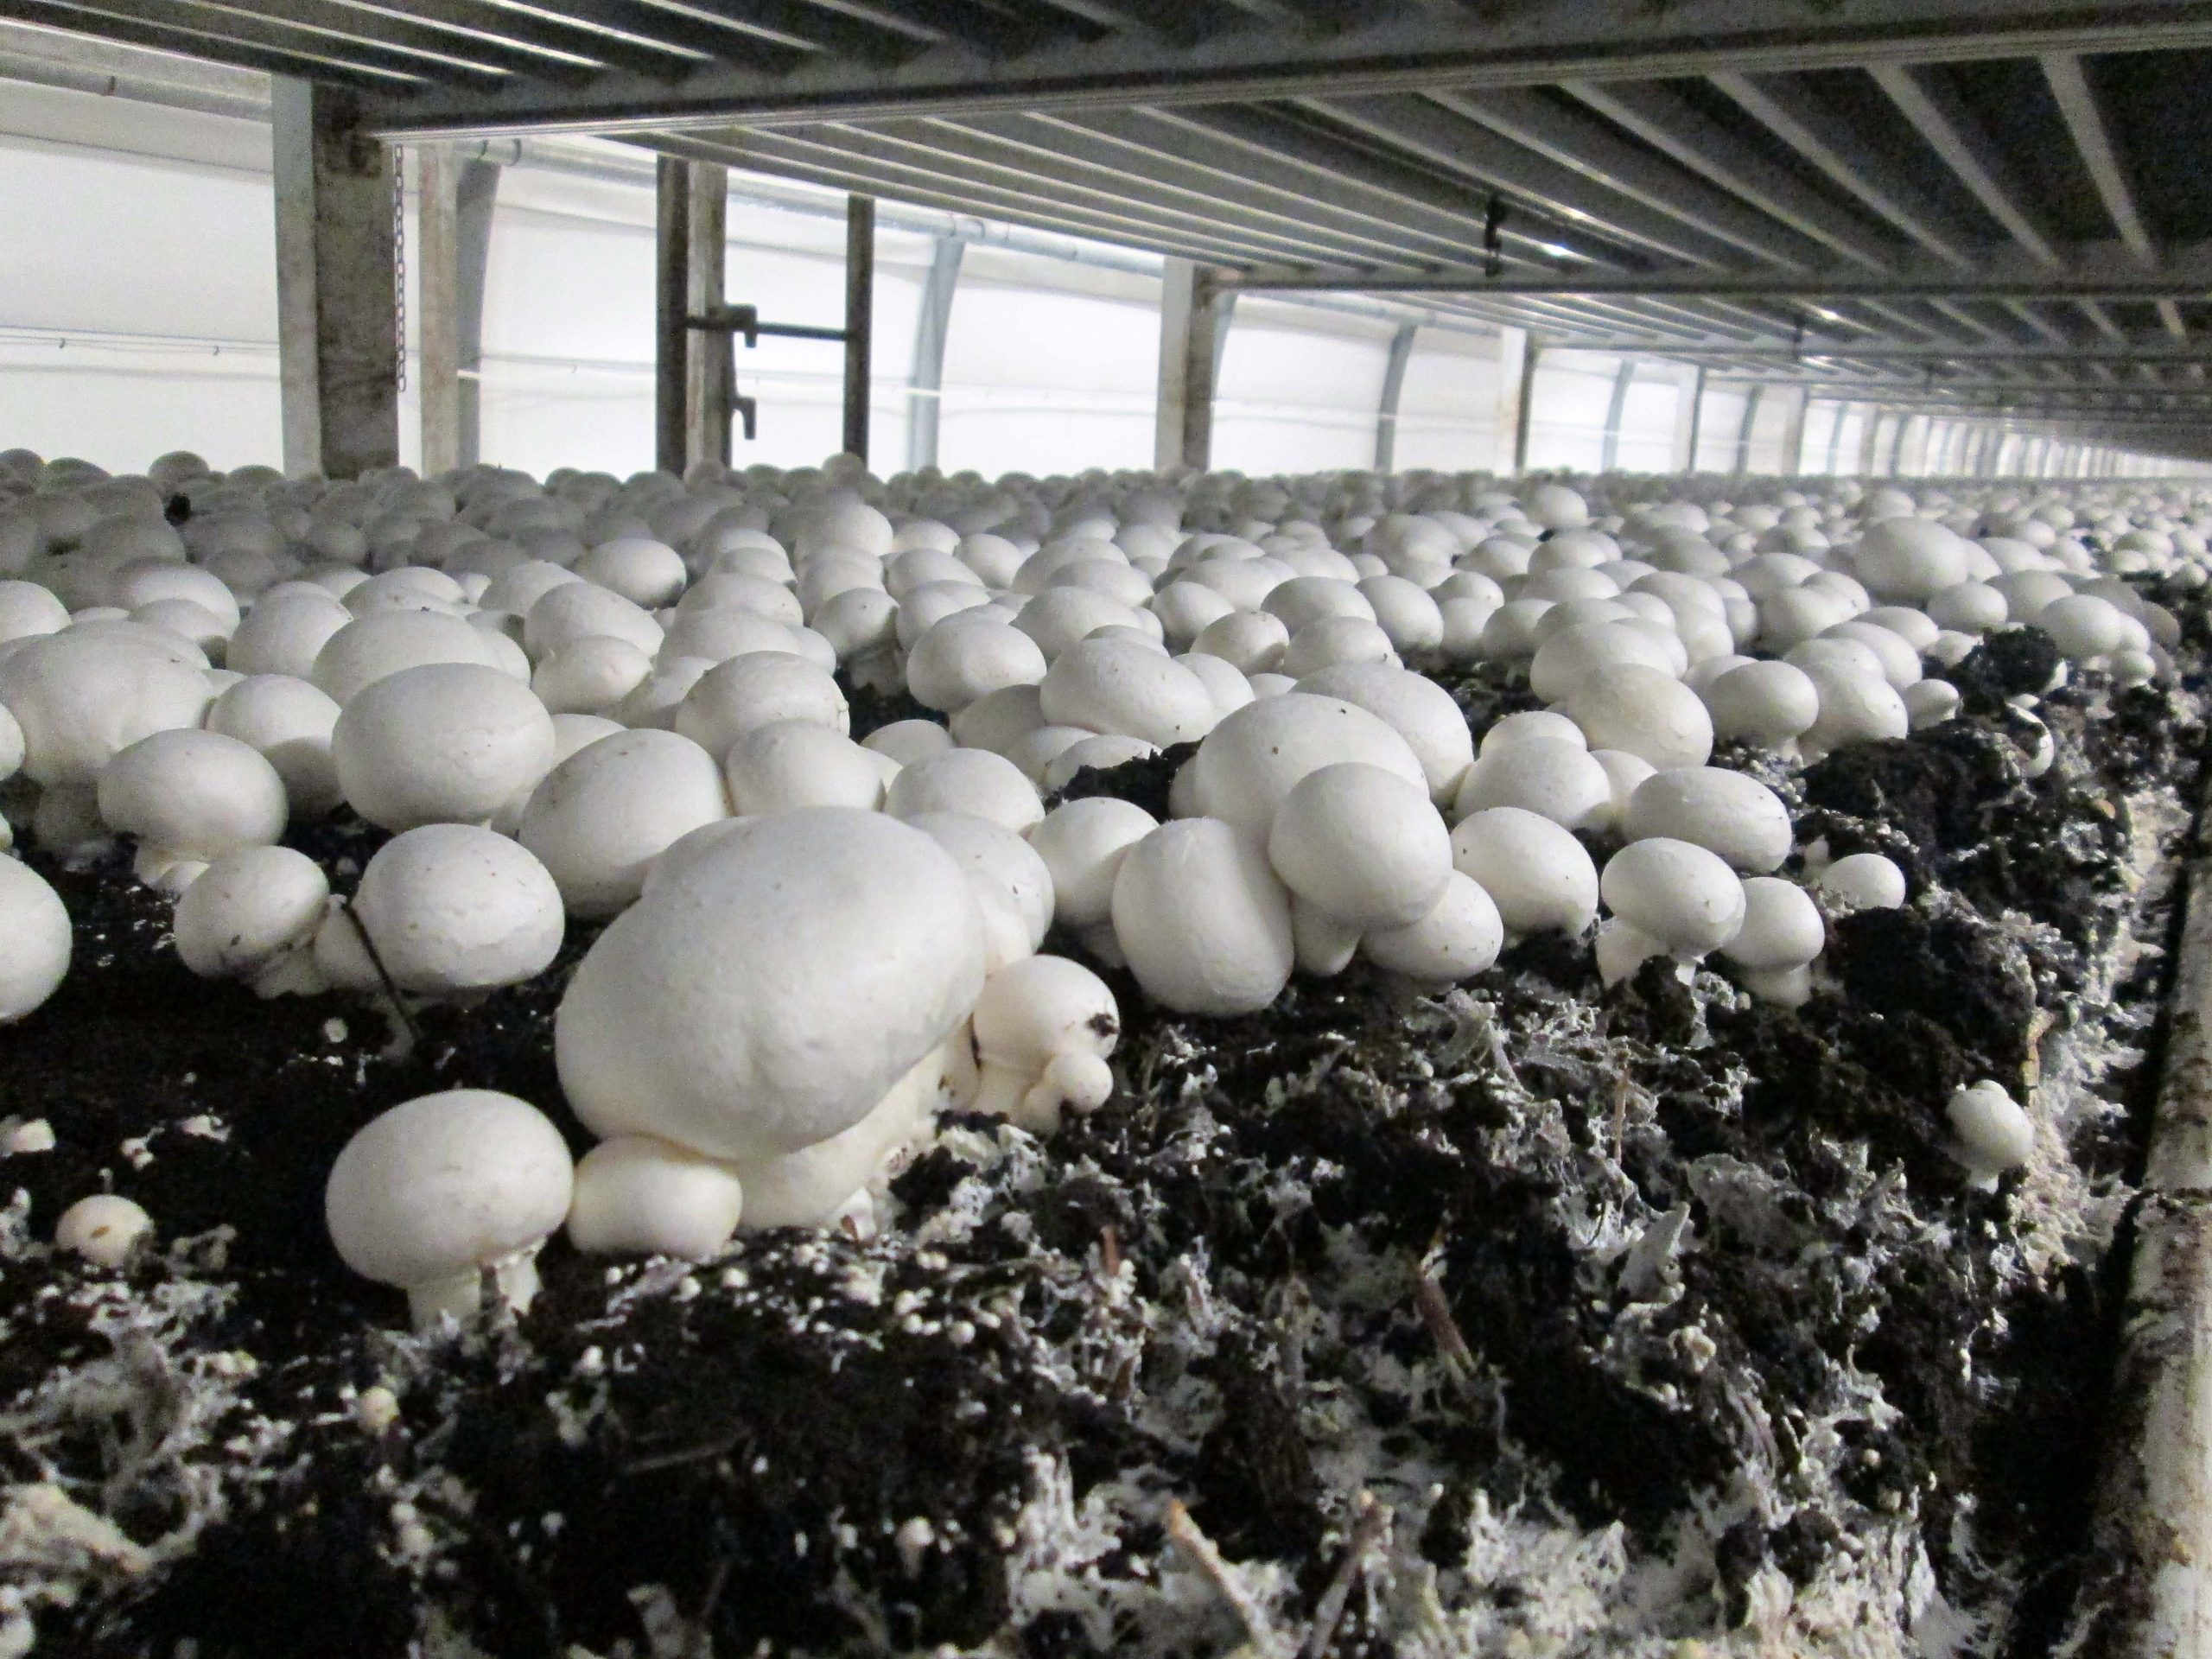 Economic importance of mushroom farming in Nigeria